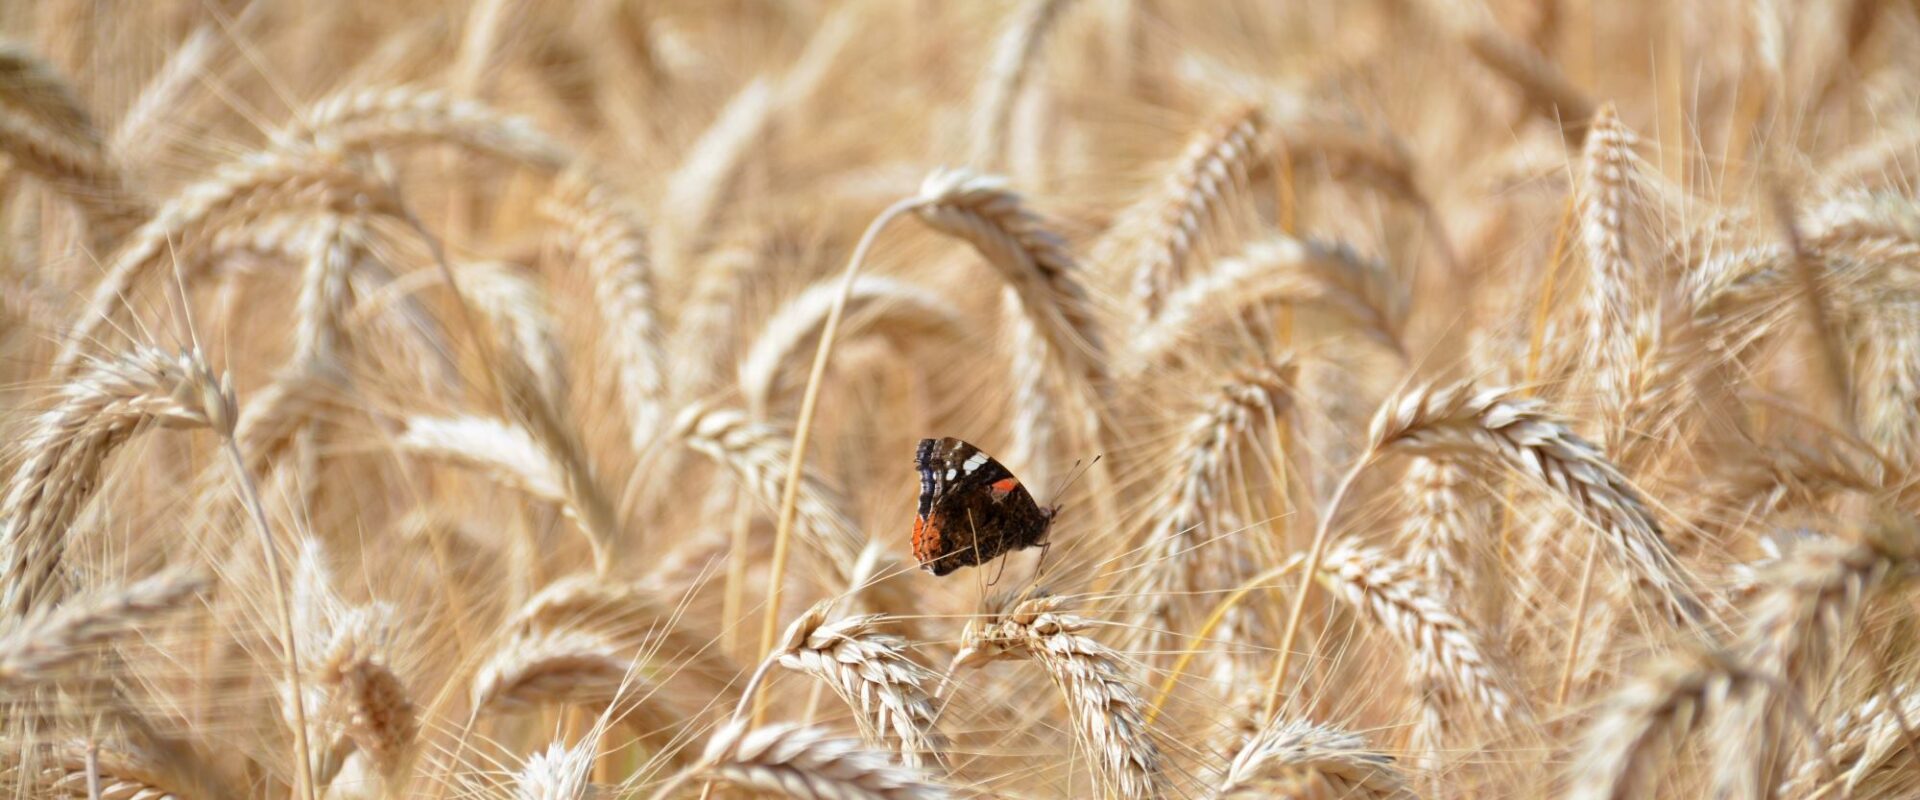 Black and Orange Butterfly on Wheat Field